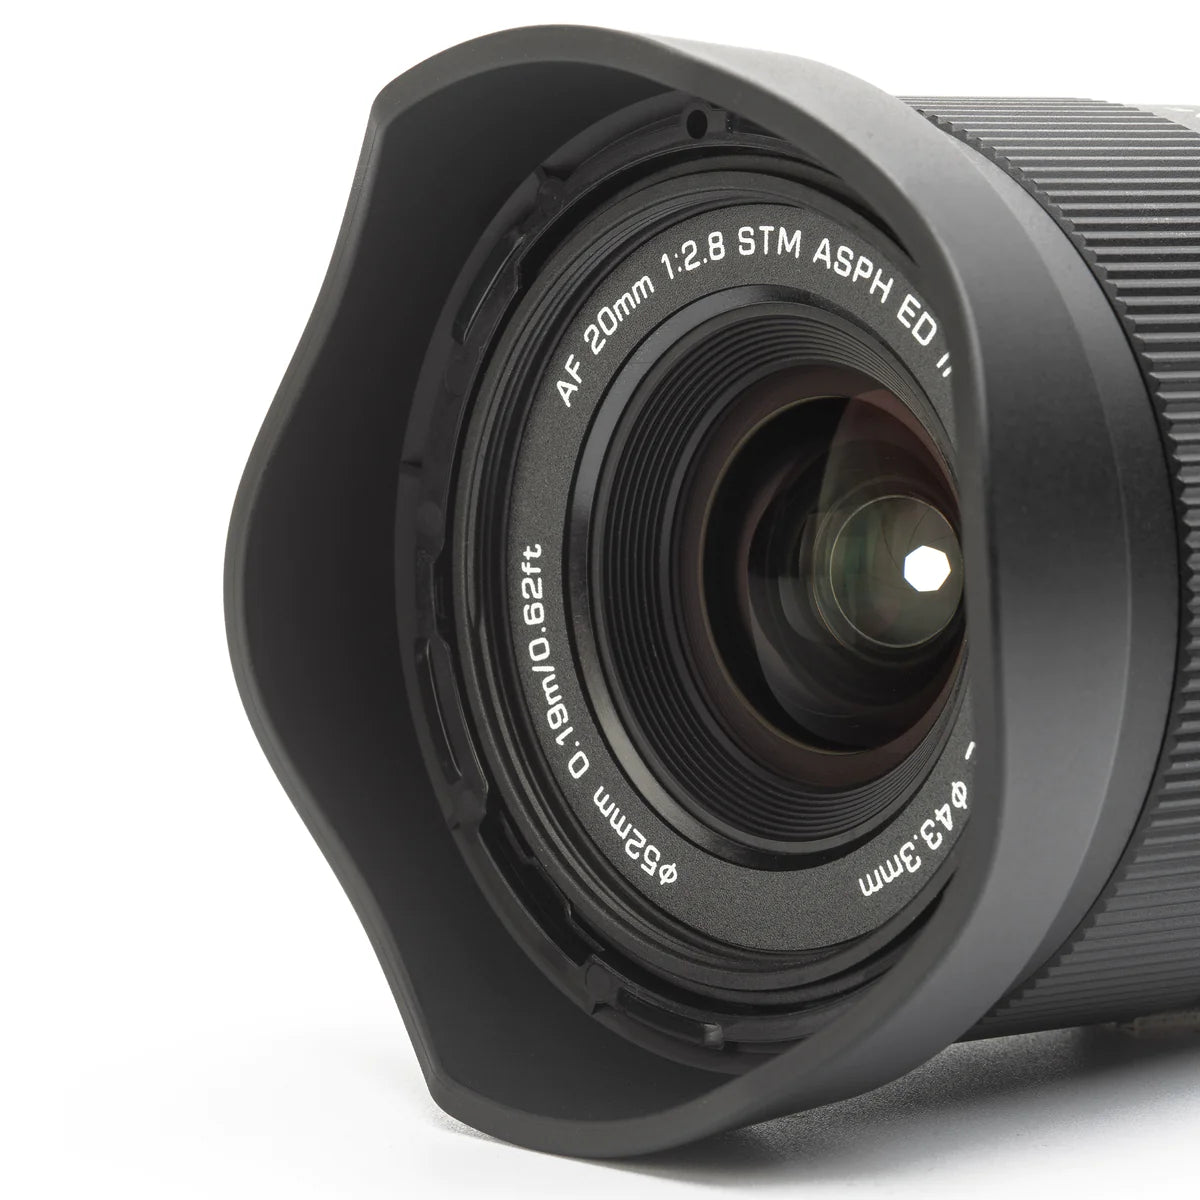 Viltrox AF 20mm F2.8 E Lightweight Auto Focus Full Frame Prime Lens For Sony E-mount